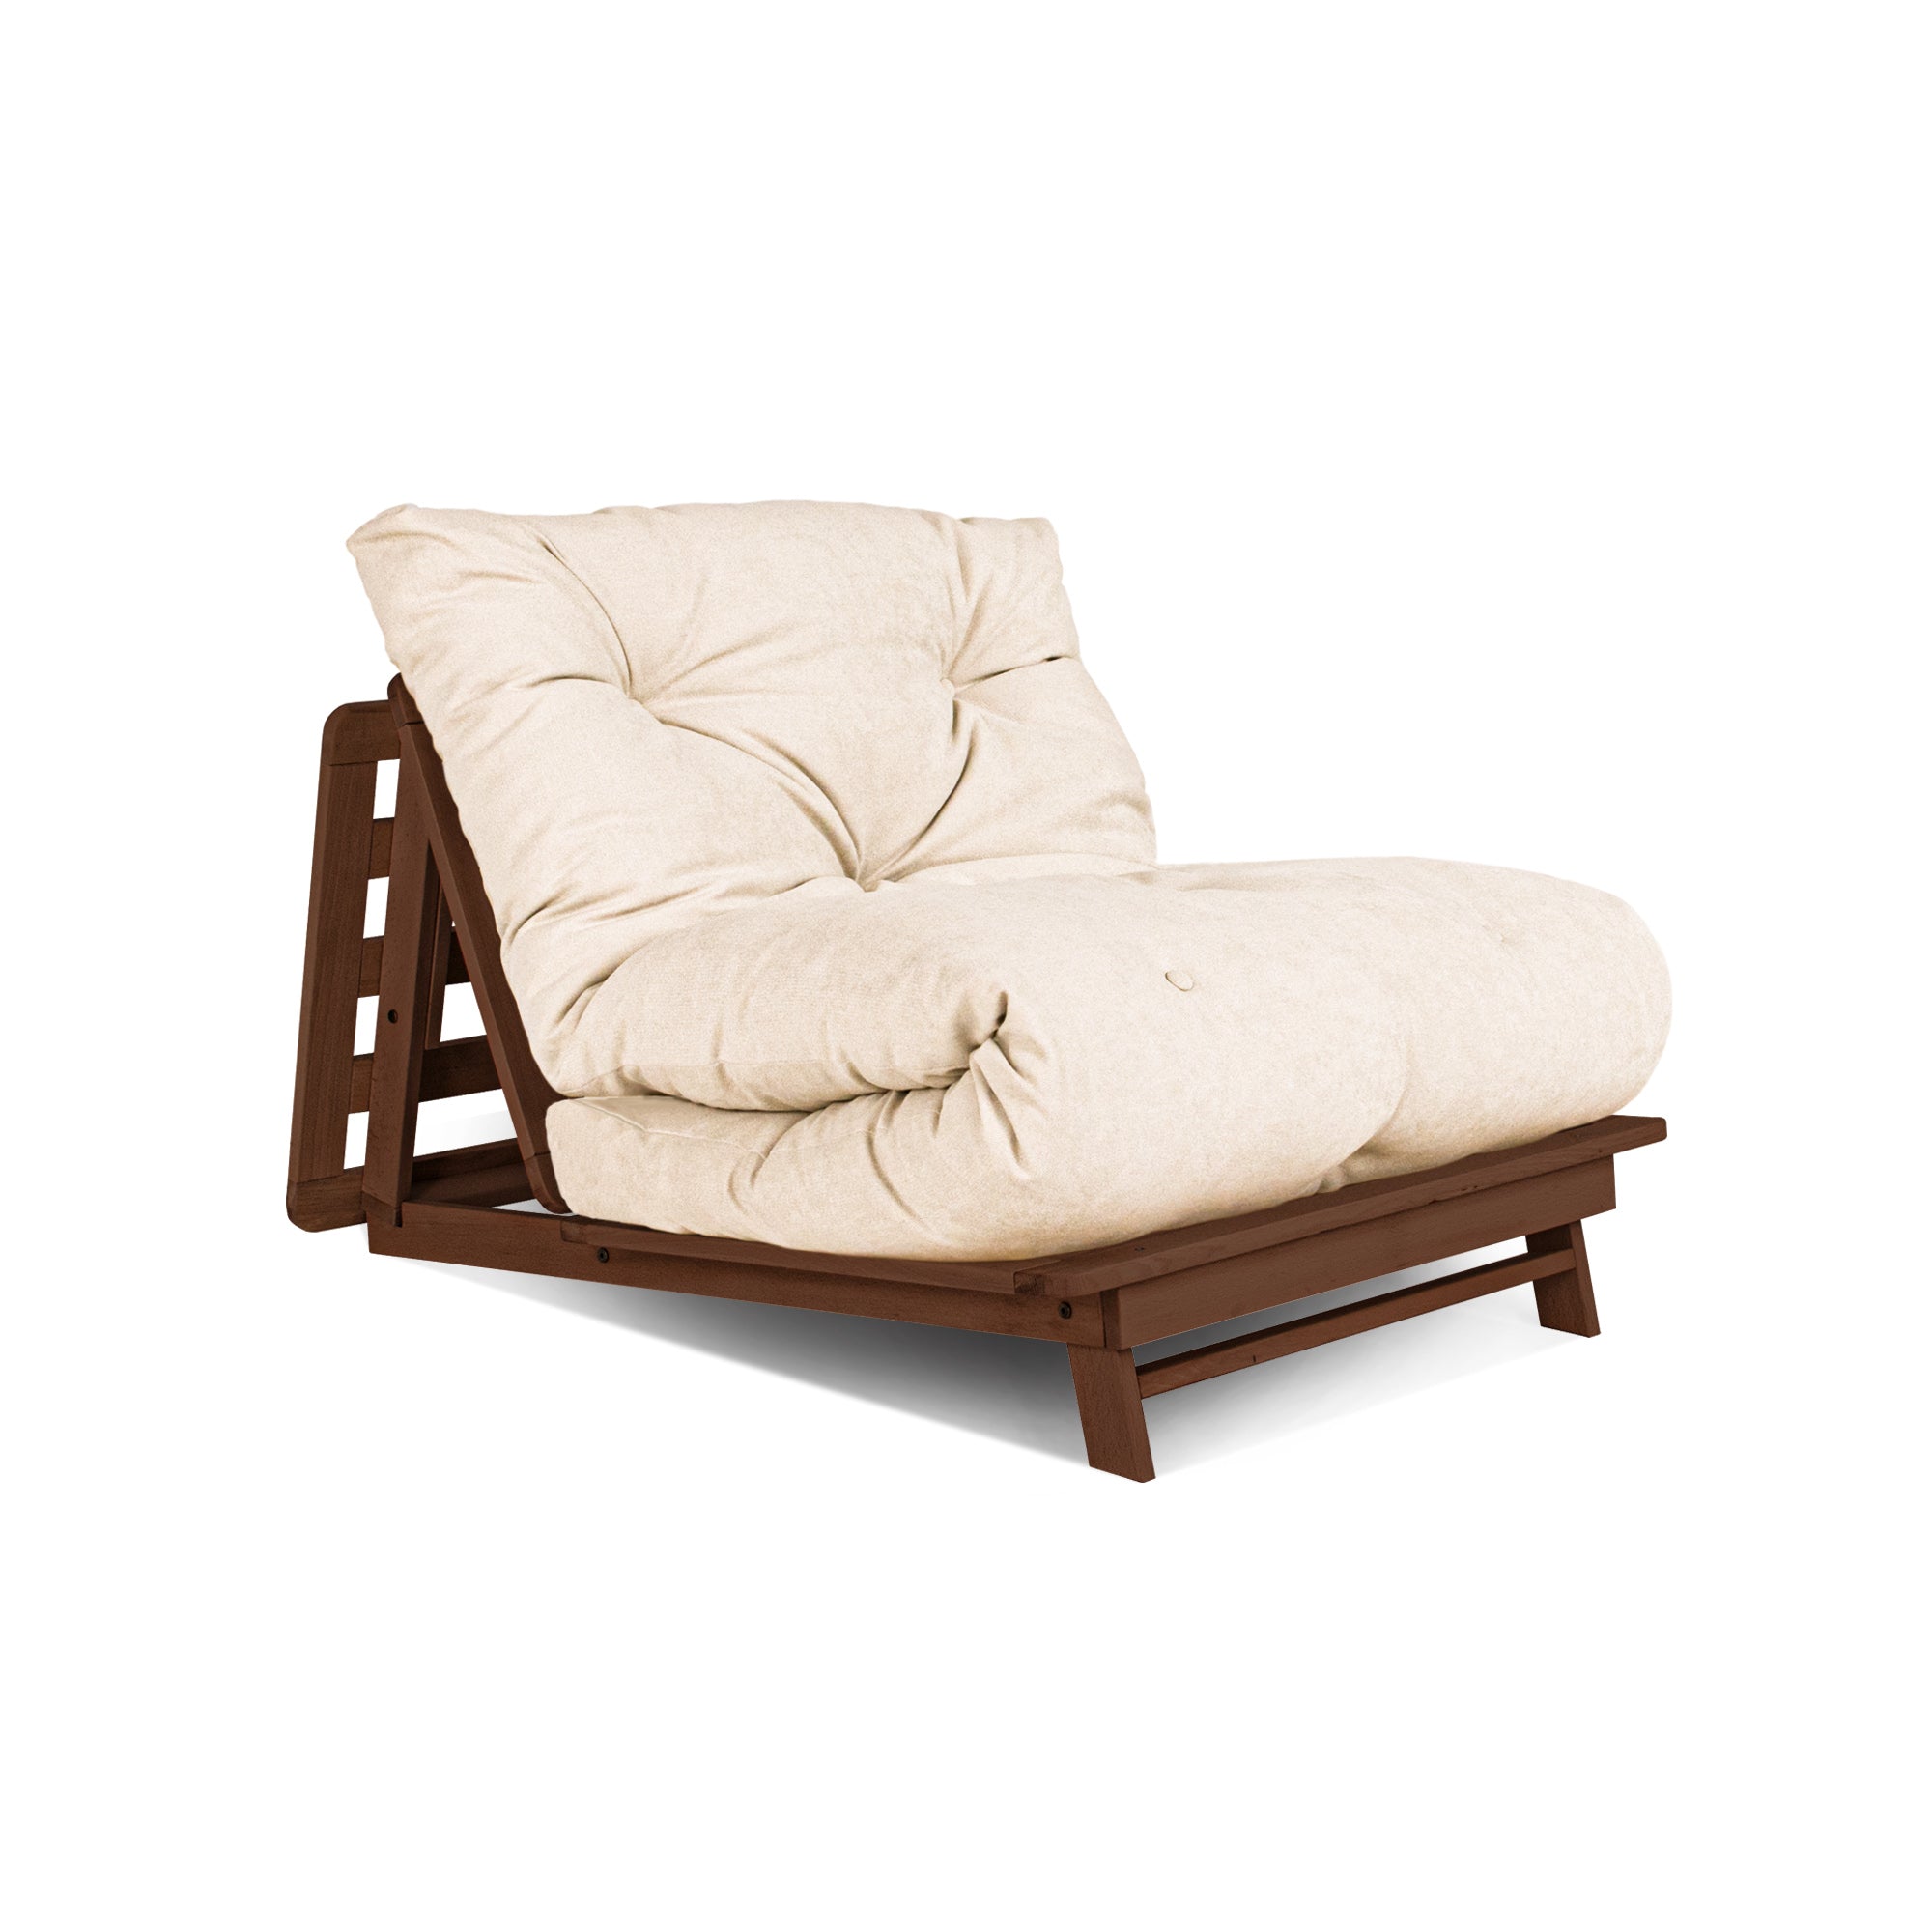 LAYTI-90 Futon Chair-walnut frame-creamy fabric